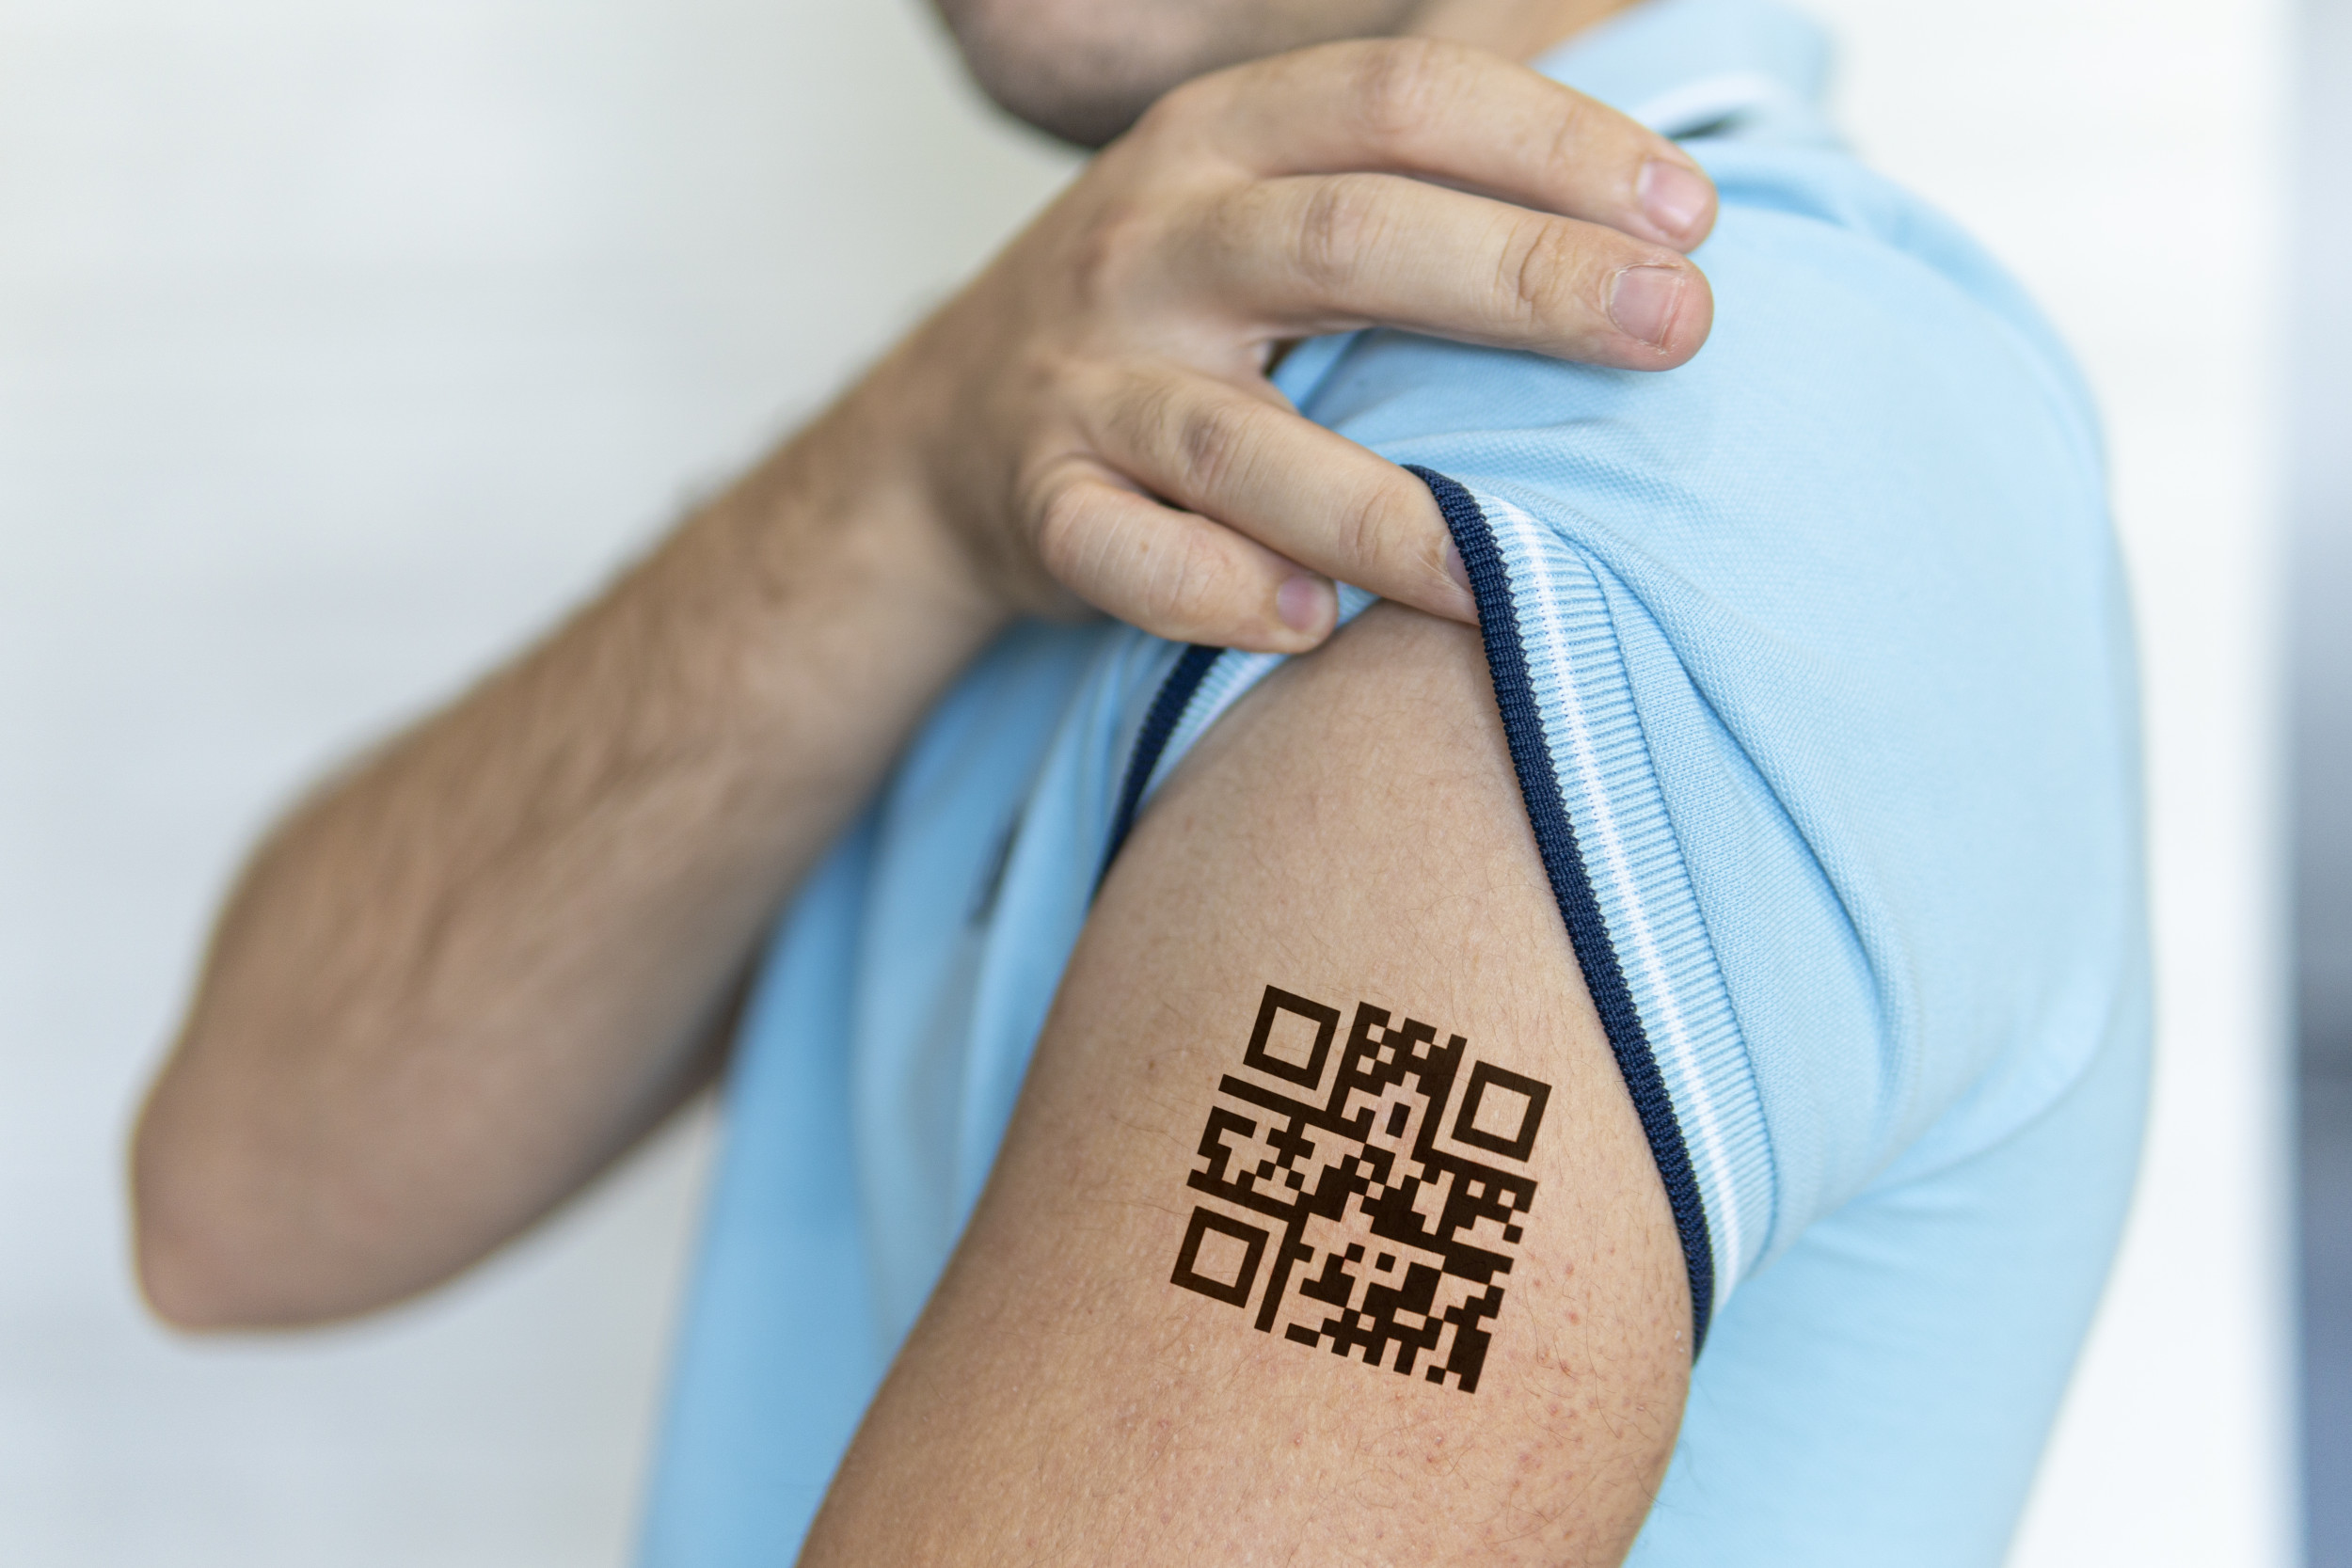 QR Code Scannable Tattoo on Human Skin | Stock Video | Pond5